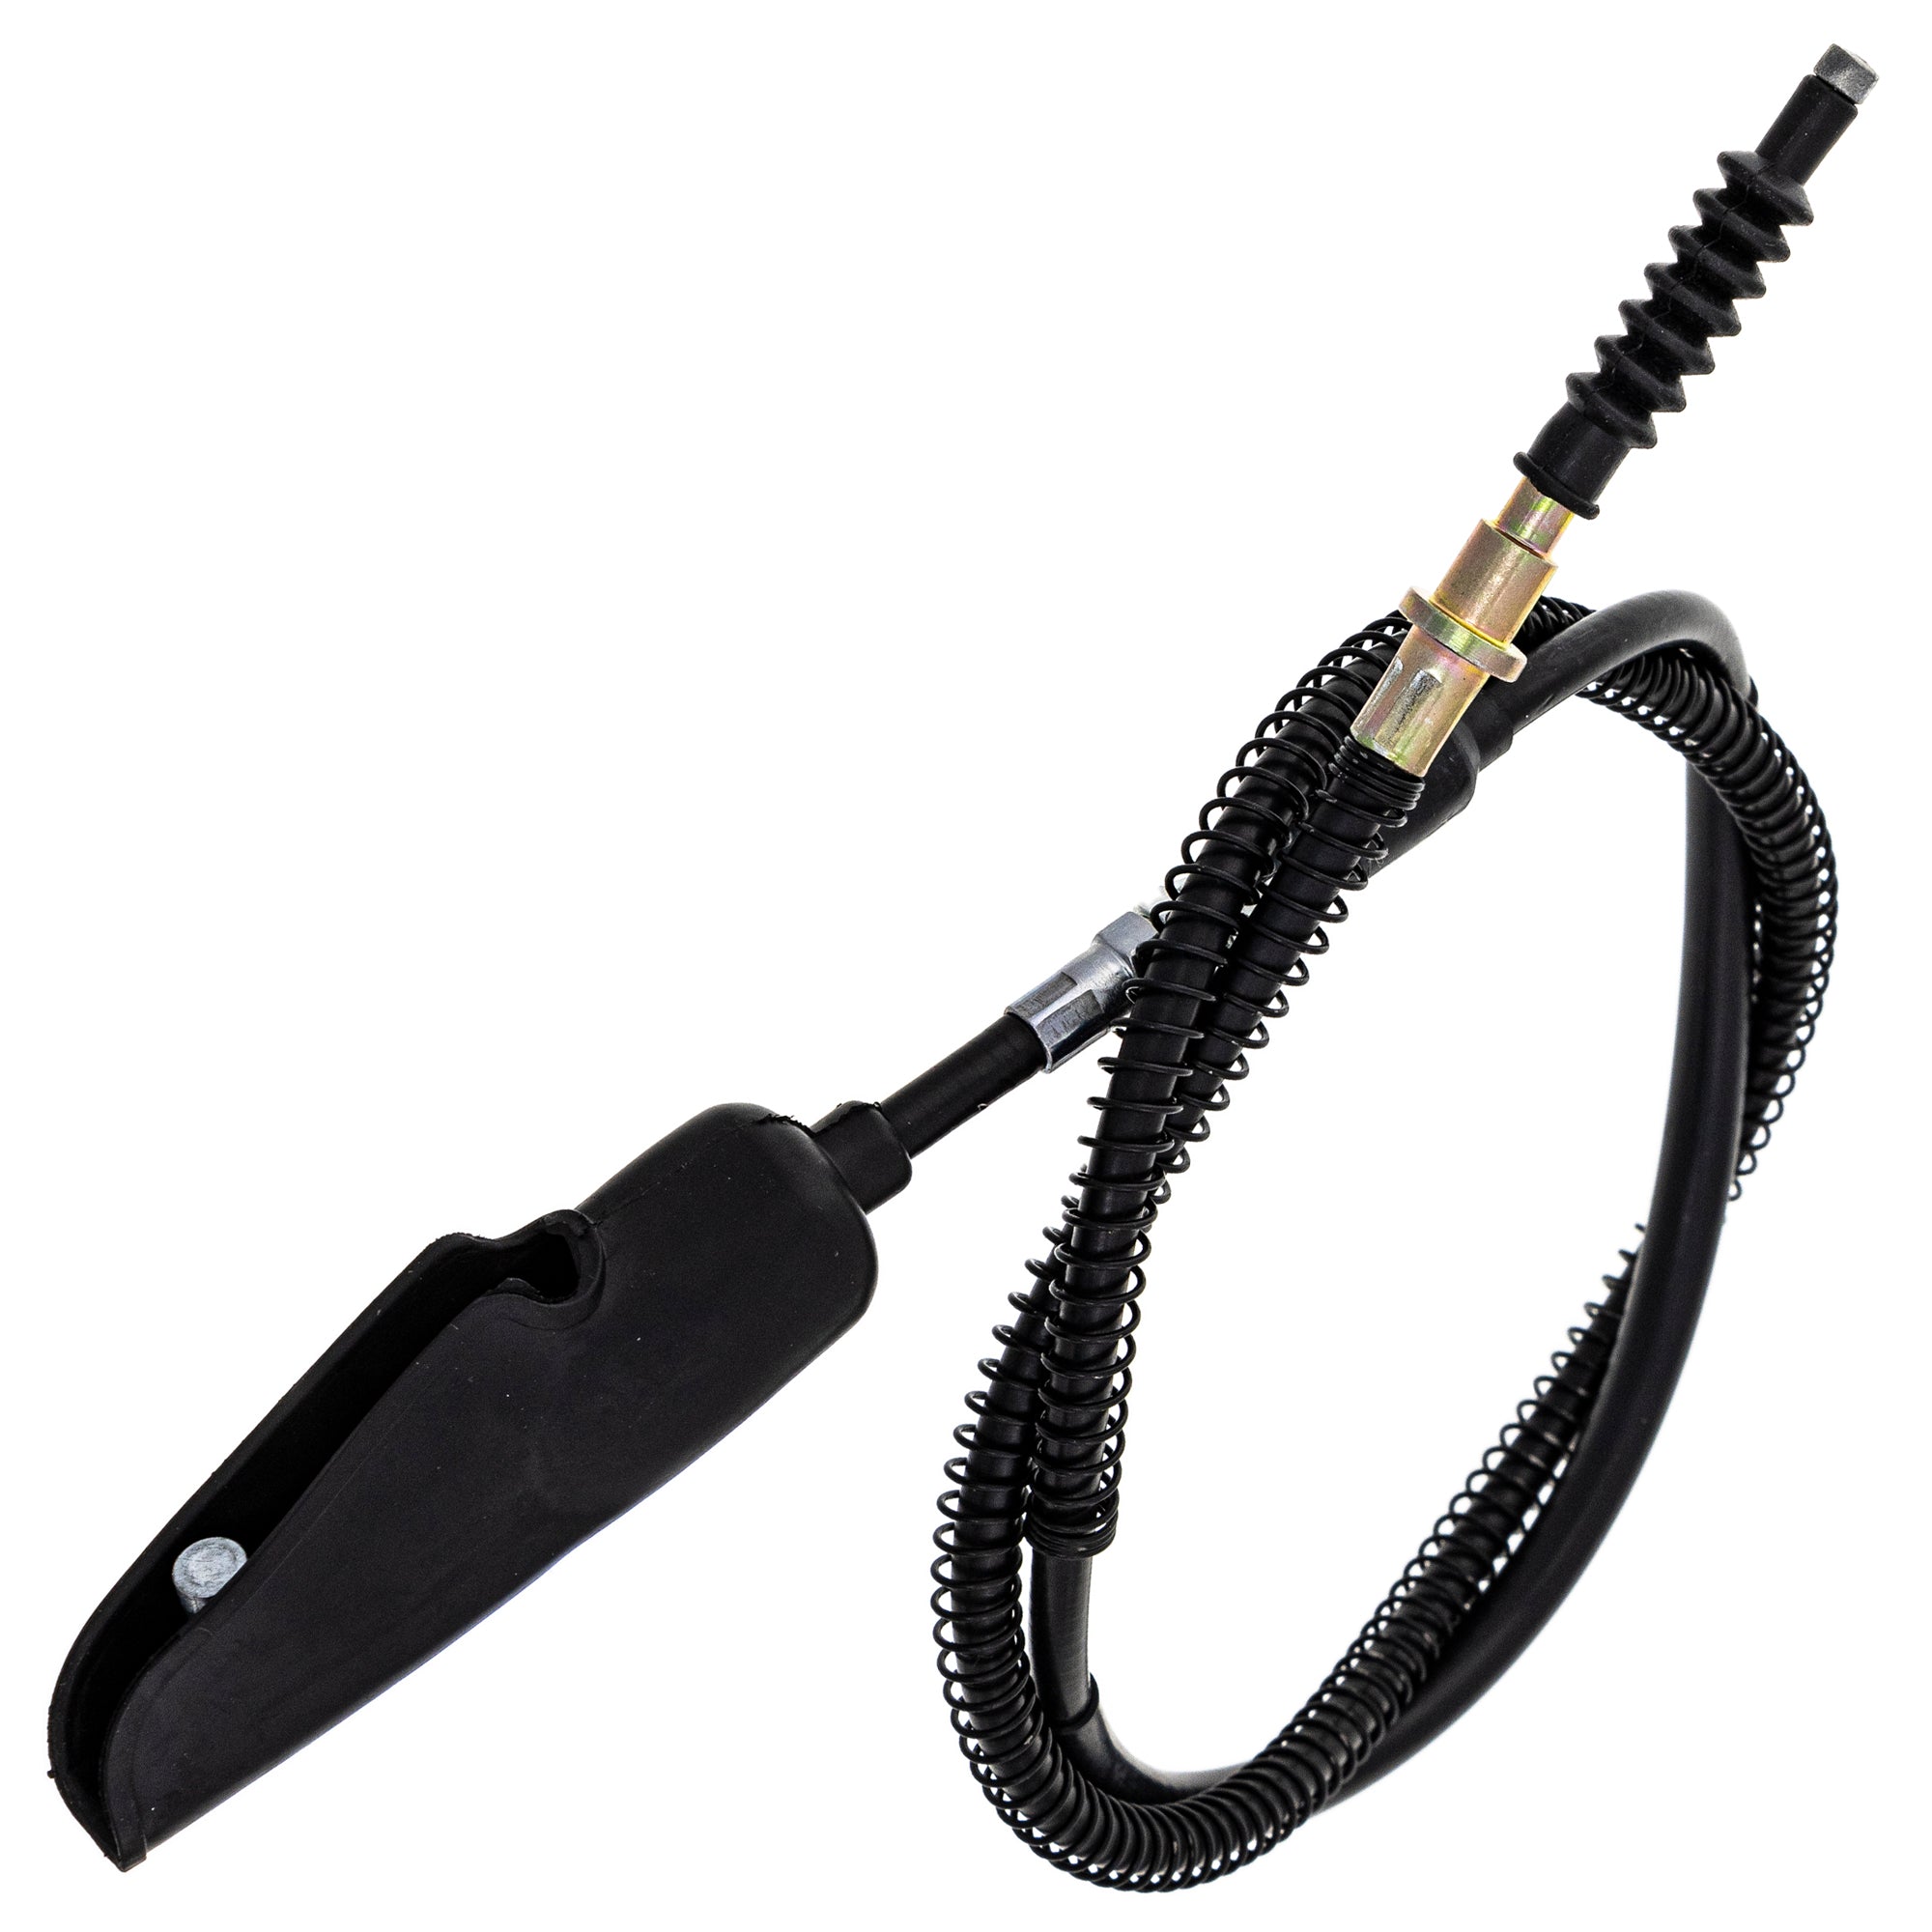 Clutch Cable for Yamaha TT500 SR500 XT500 2J2-26335-01-00